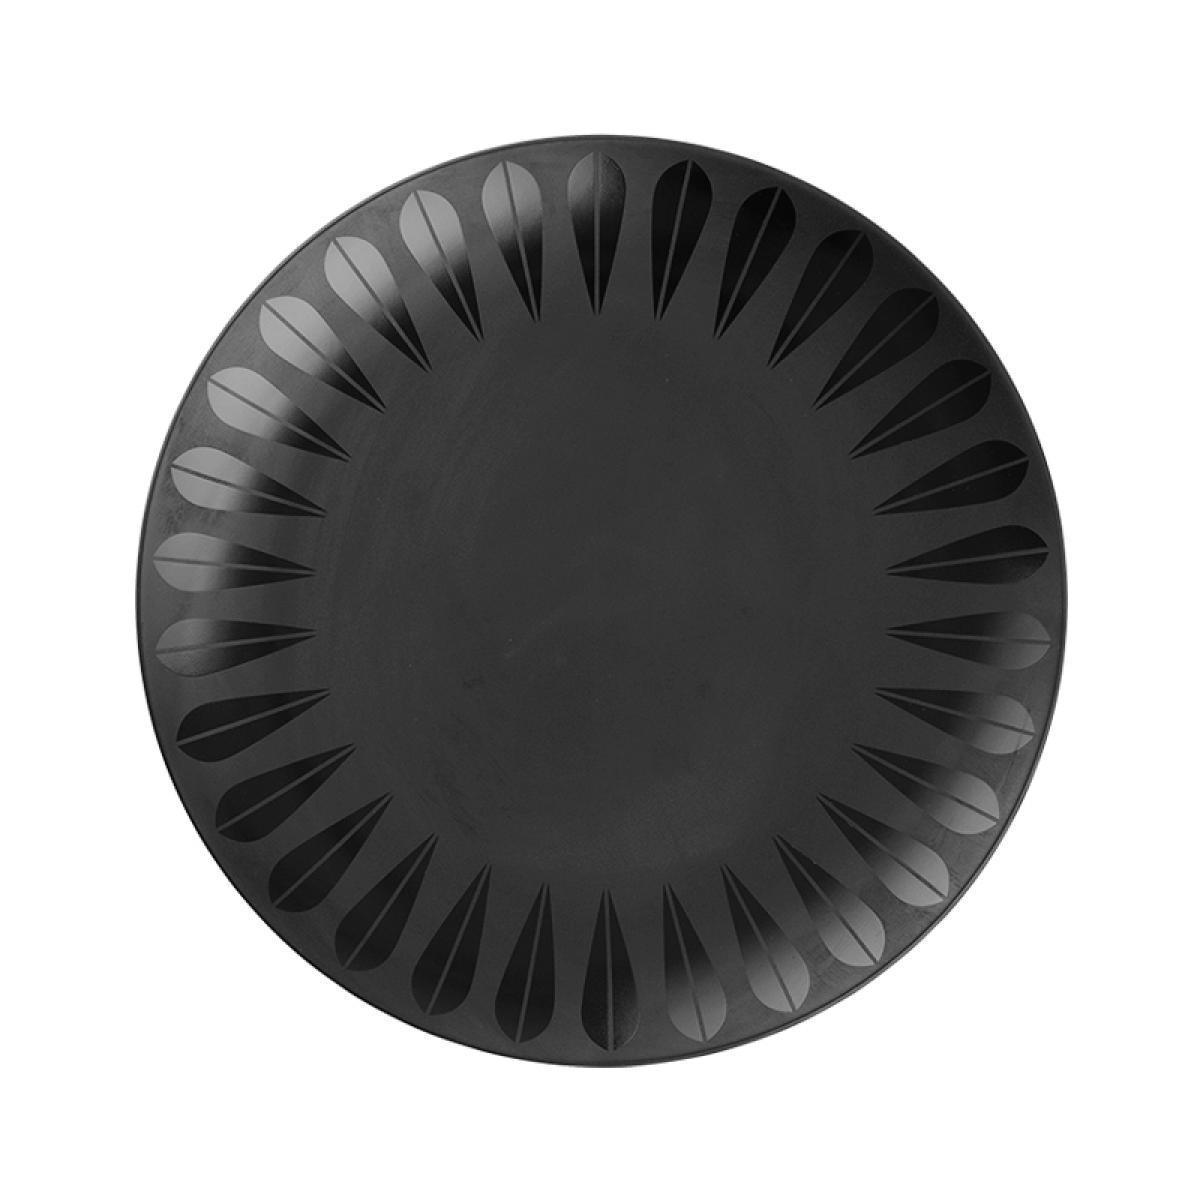 Lucie Kaas Arne Clausen Deep Plate Black, Ø 28 cm